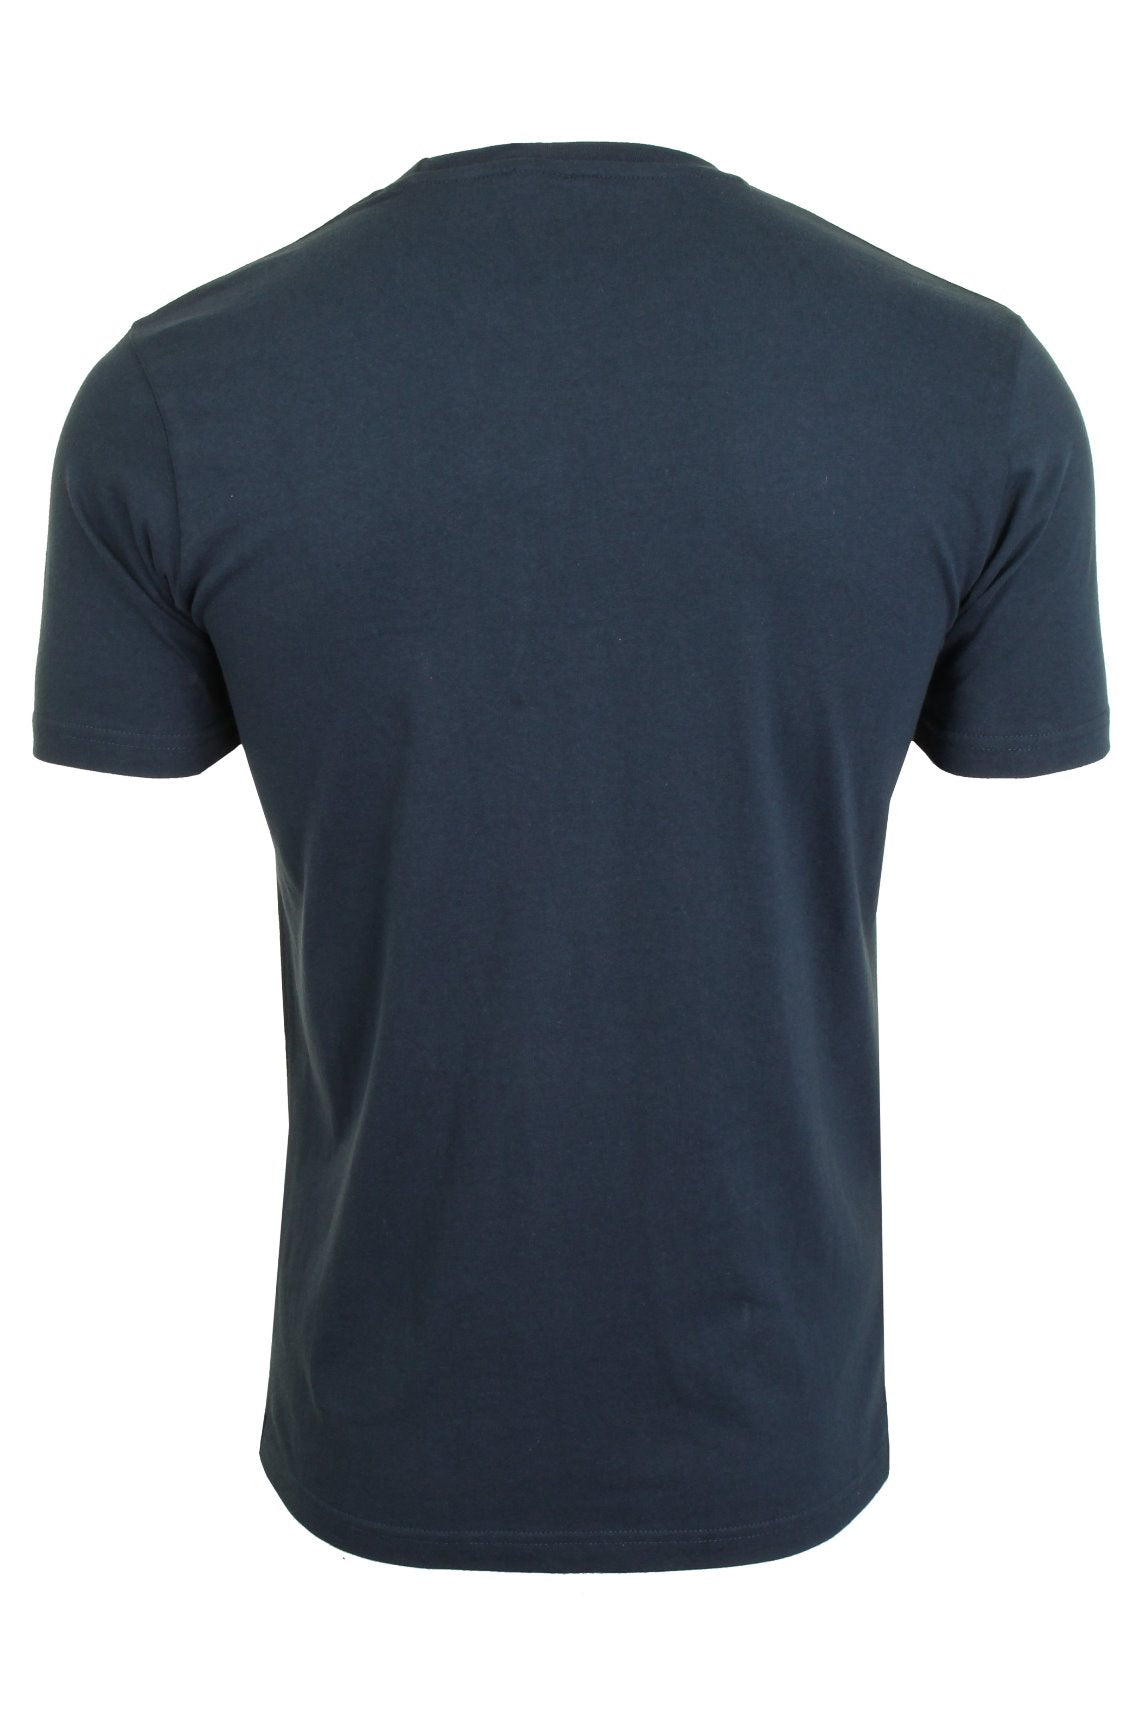 Mens Ellesse T-Shirt 'Canaletto' Short Sleeved, 03, Shs04548, Dress Blue